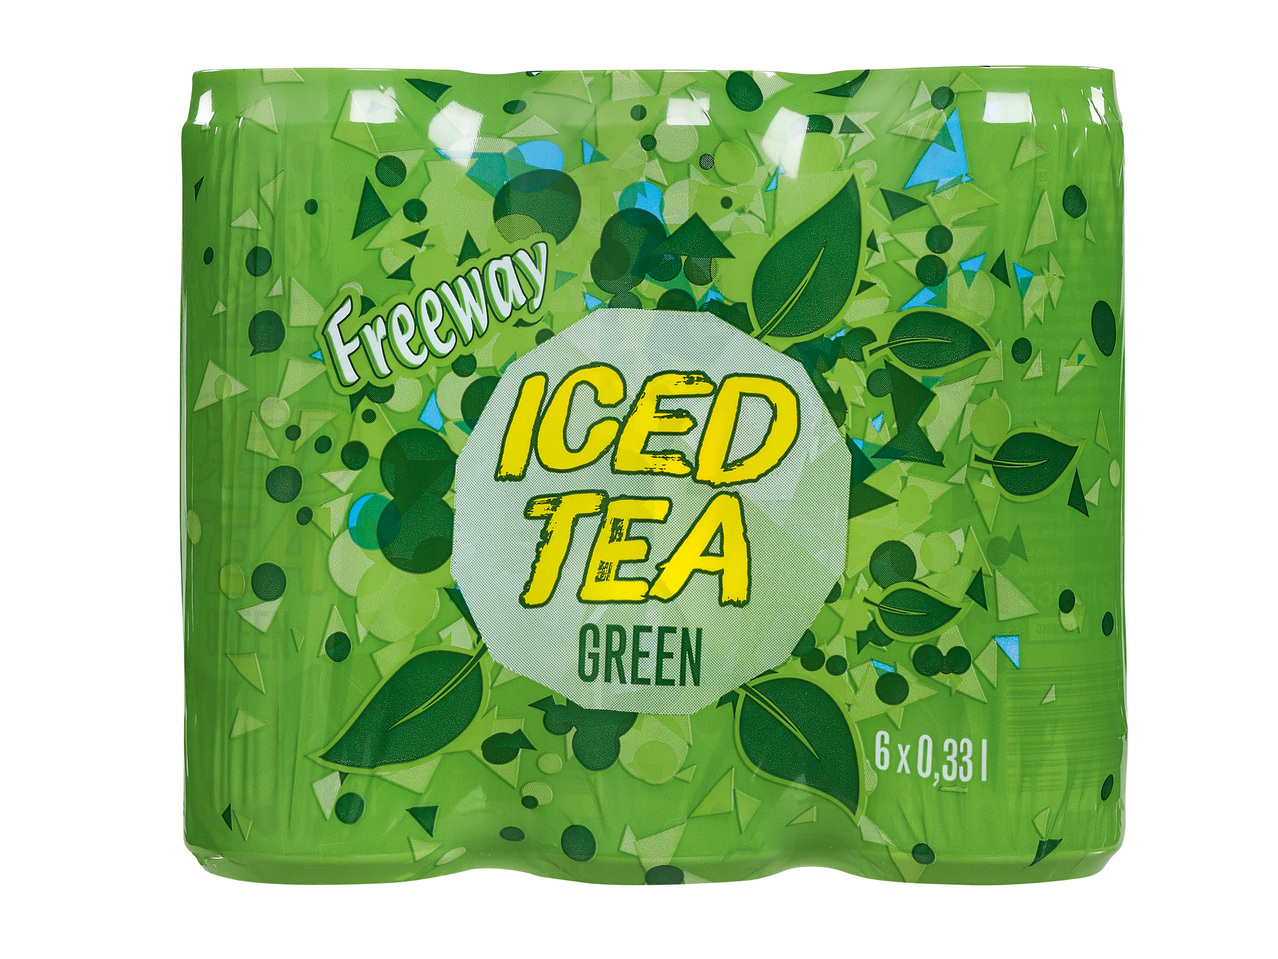 Iced tea green